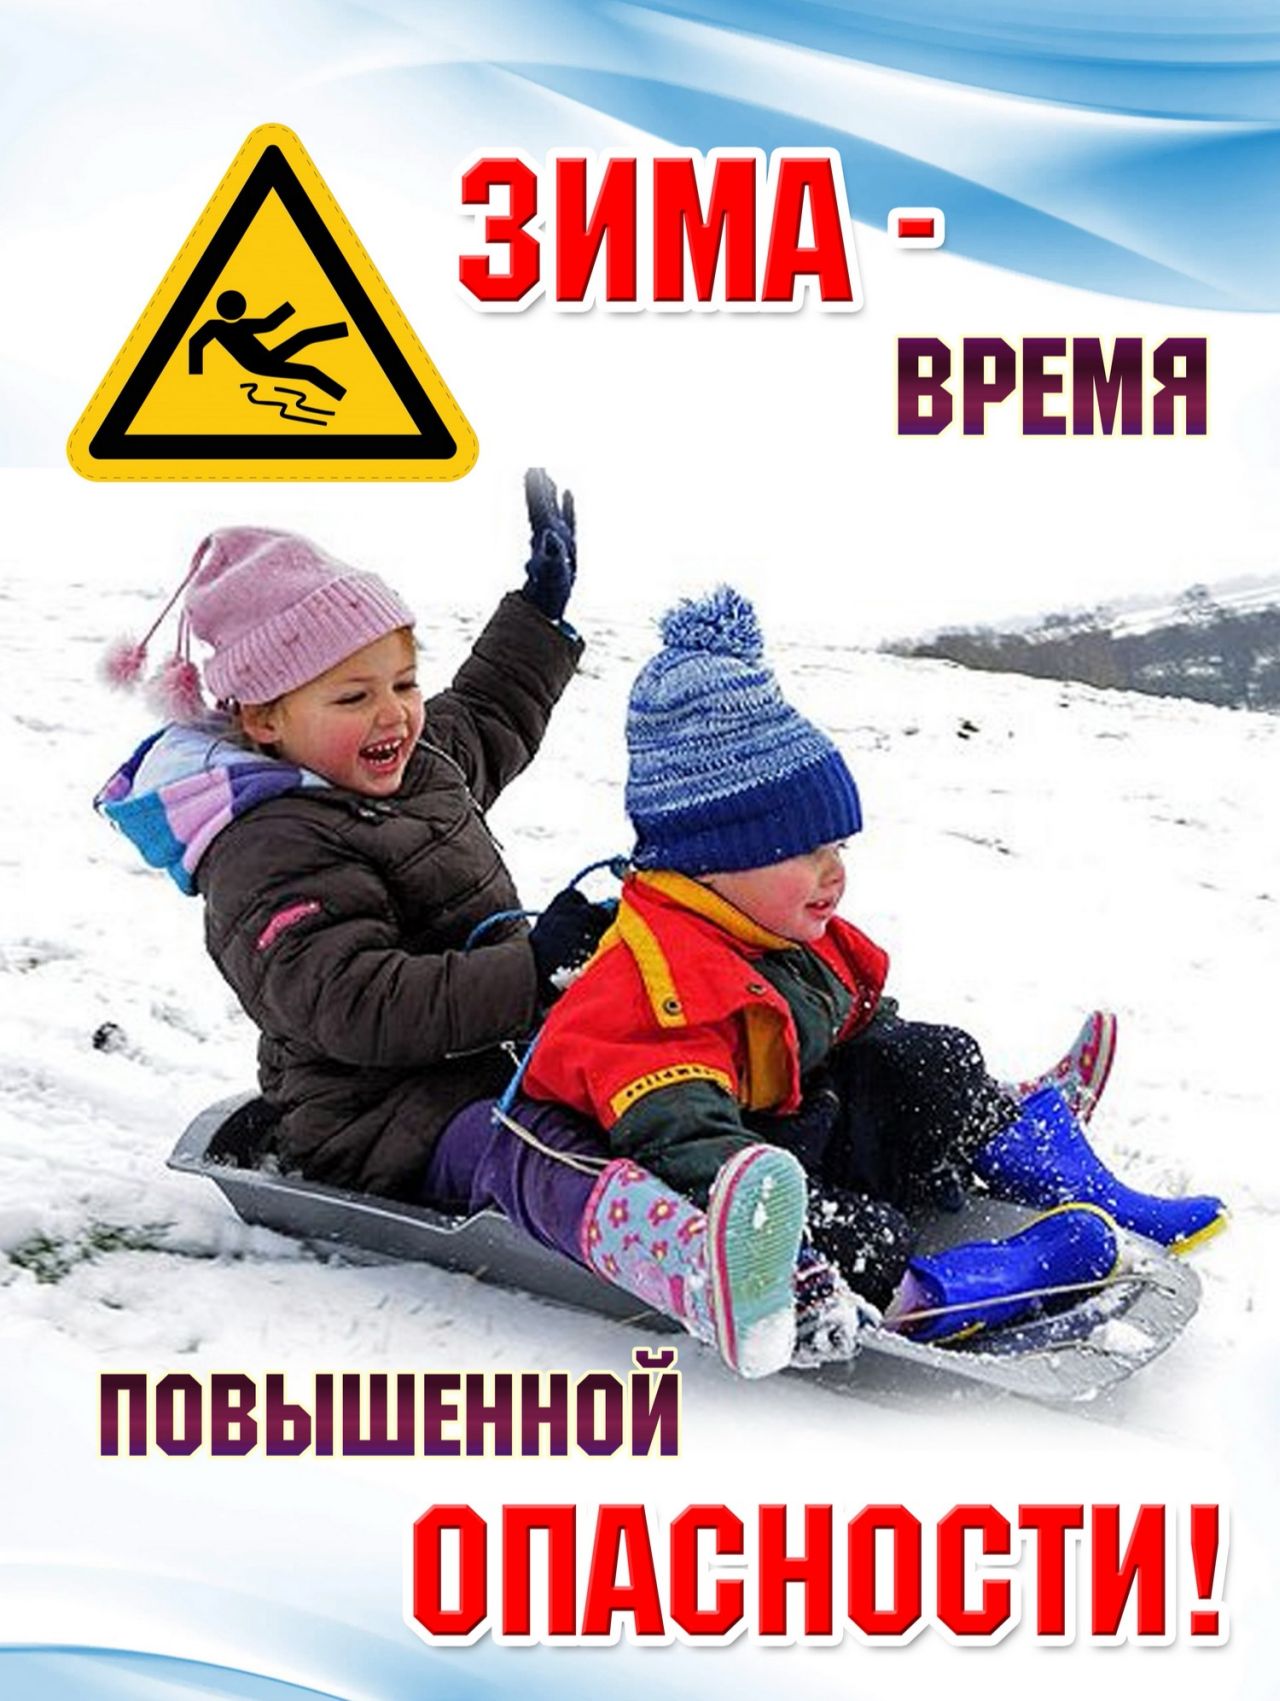 Plakat-3-66_novyj-razmer_edit_164808227808705